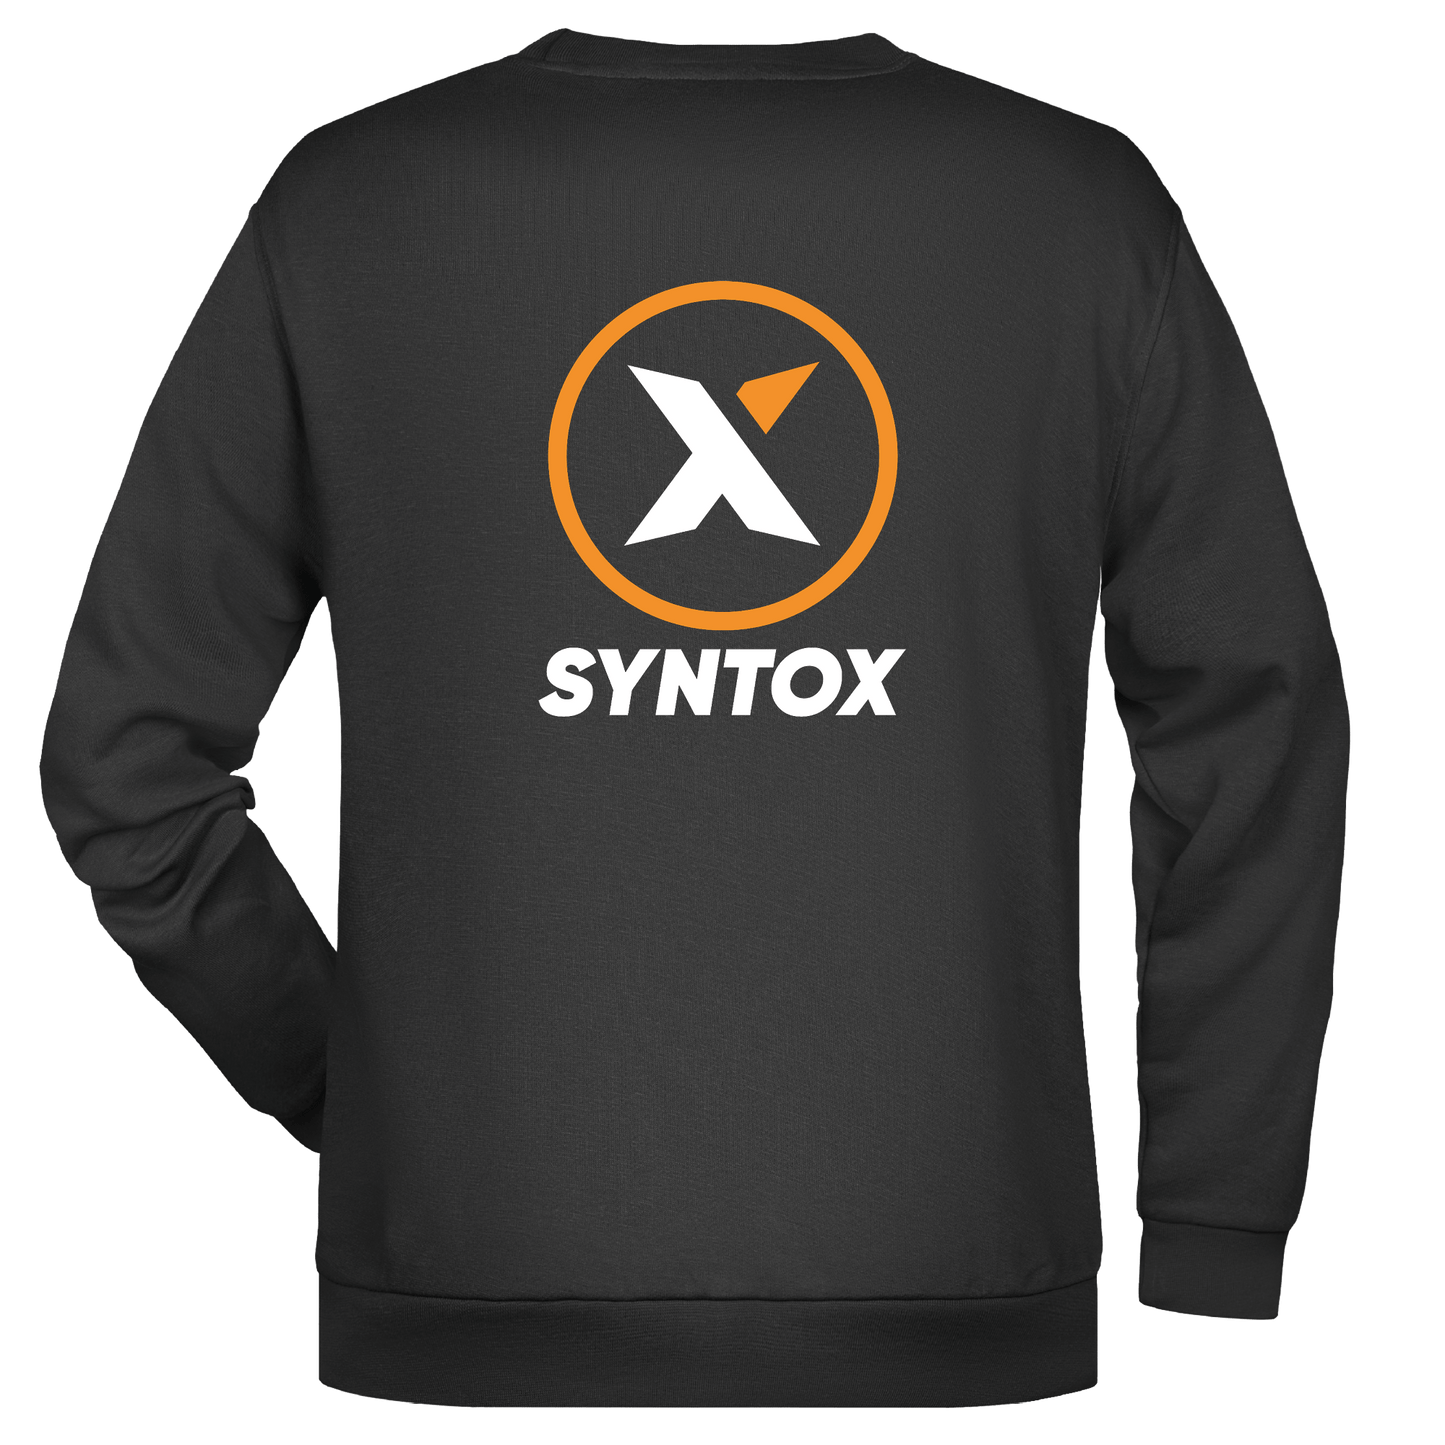 Bomulds Sweatshirt - Voksen - Syntox